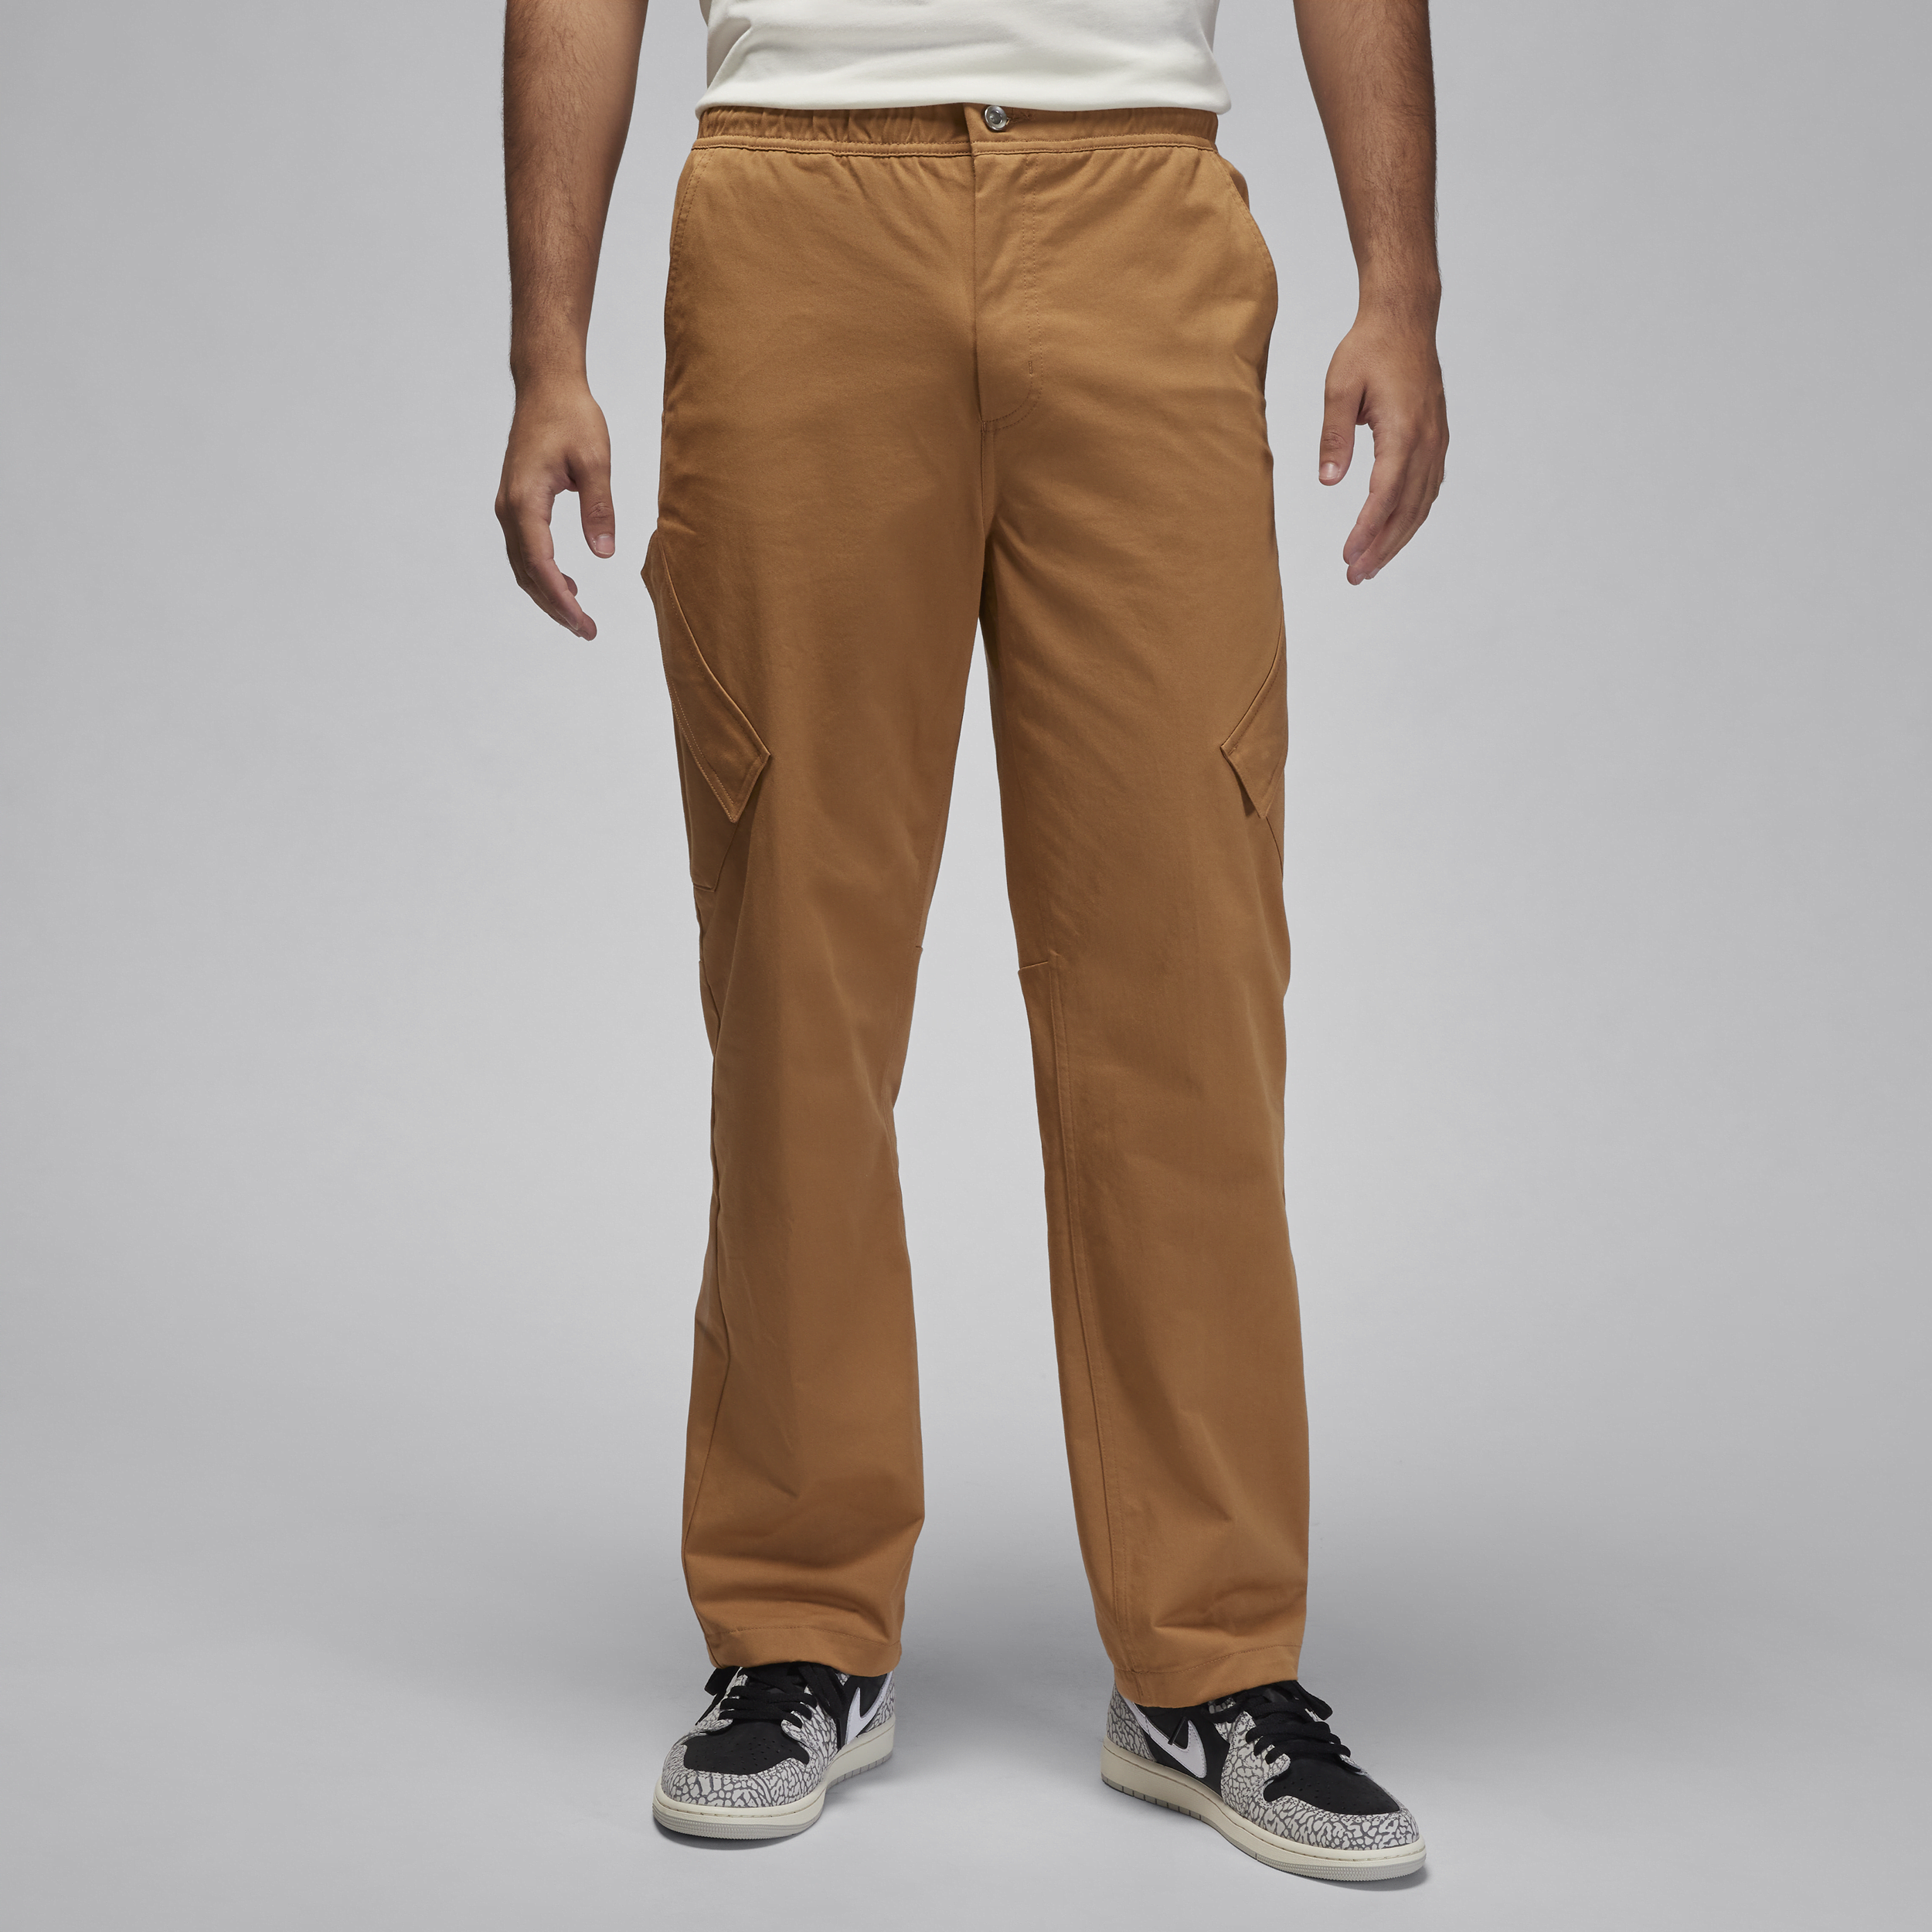 Nike Pantaloni Jordan Essentials Chicago – Uomo - Marrone